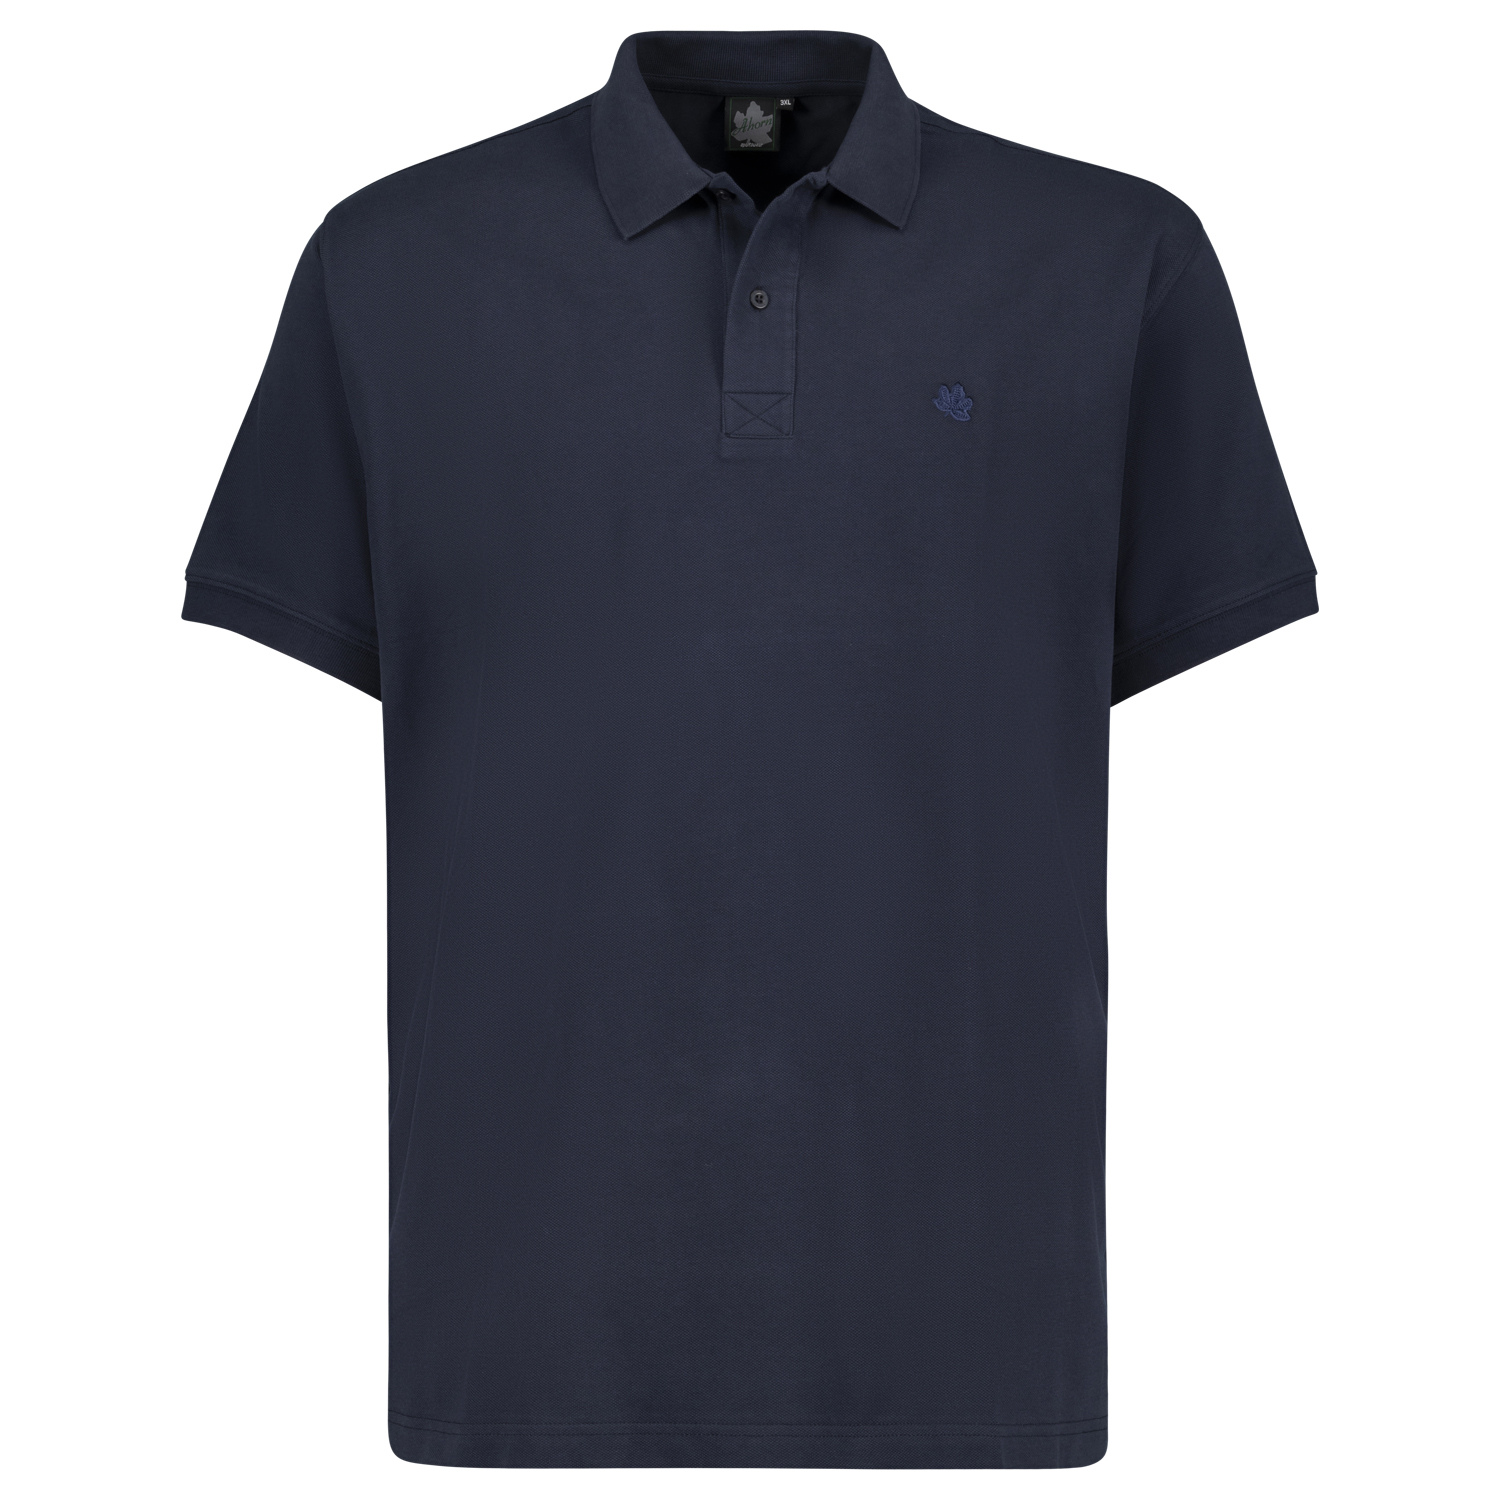 Polo-shirt en bleu foncé à manches courtes by Ahorn Sportswear en grandes tailles 2XL - 10XL